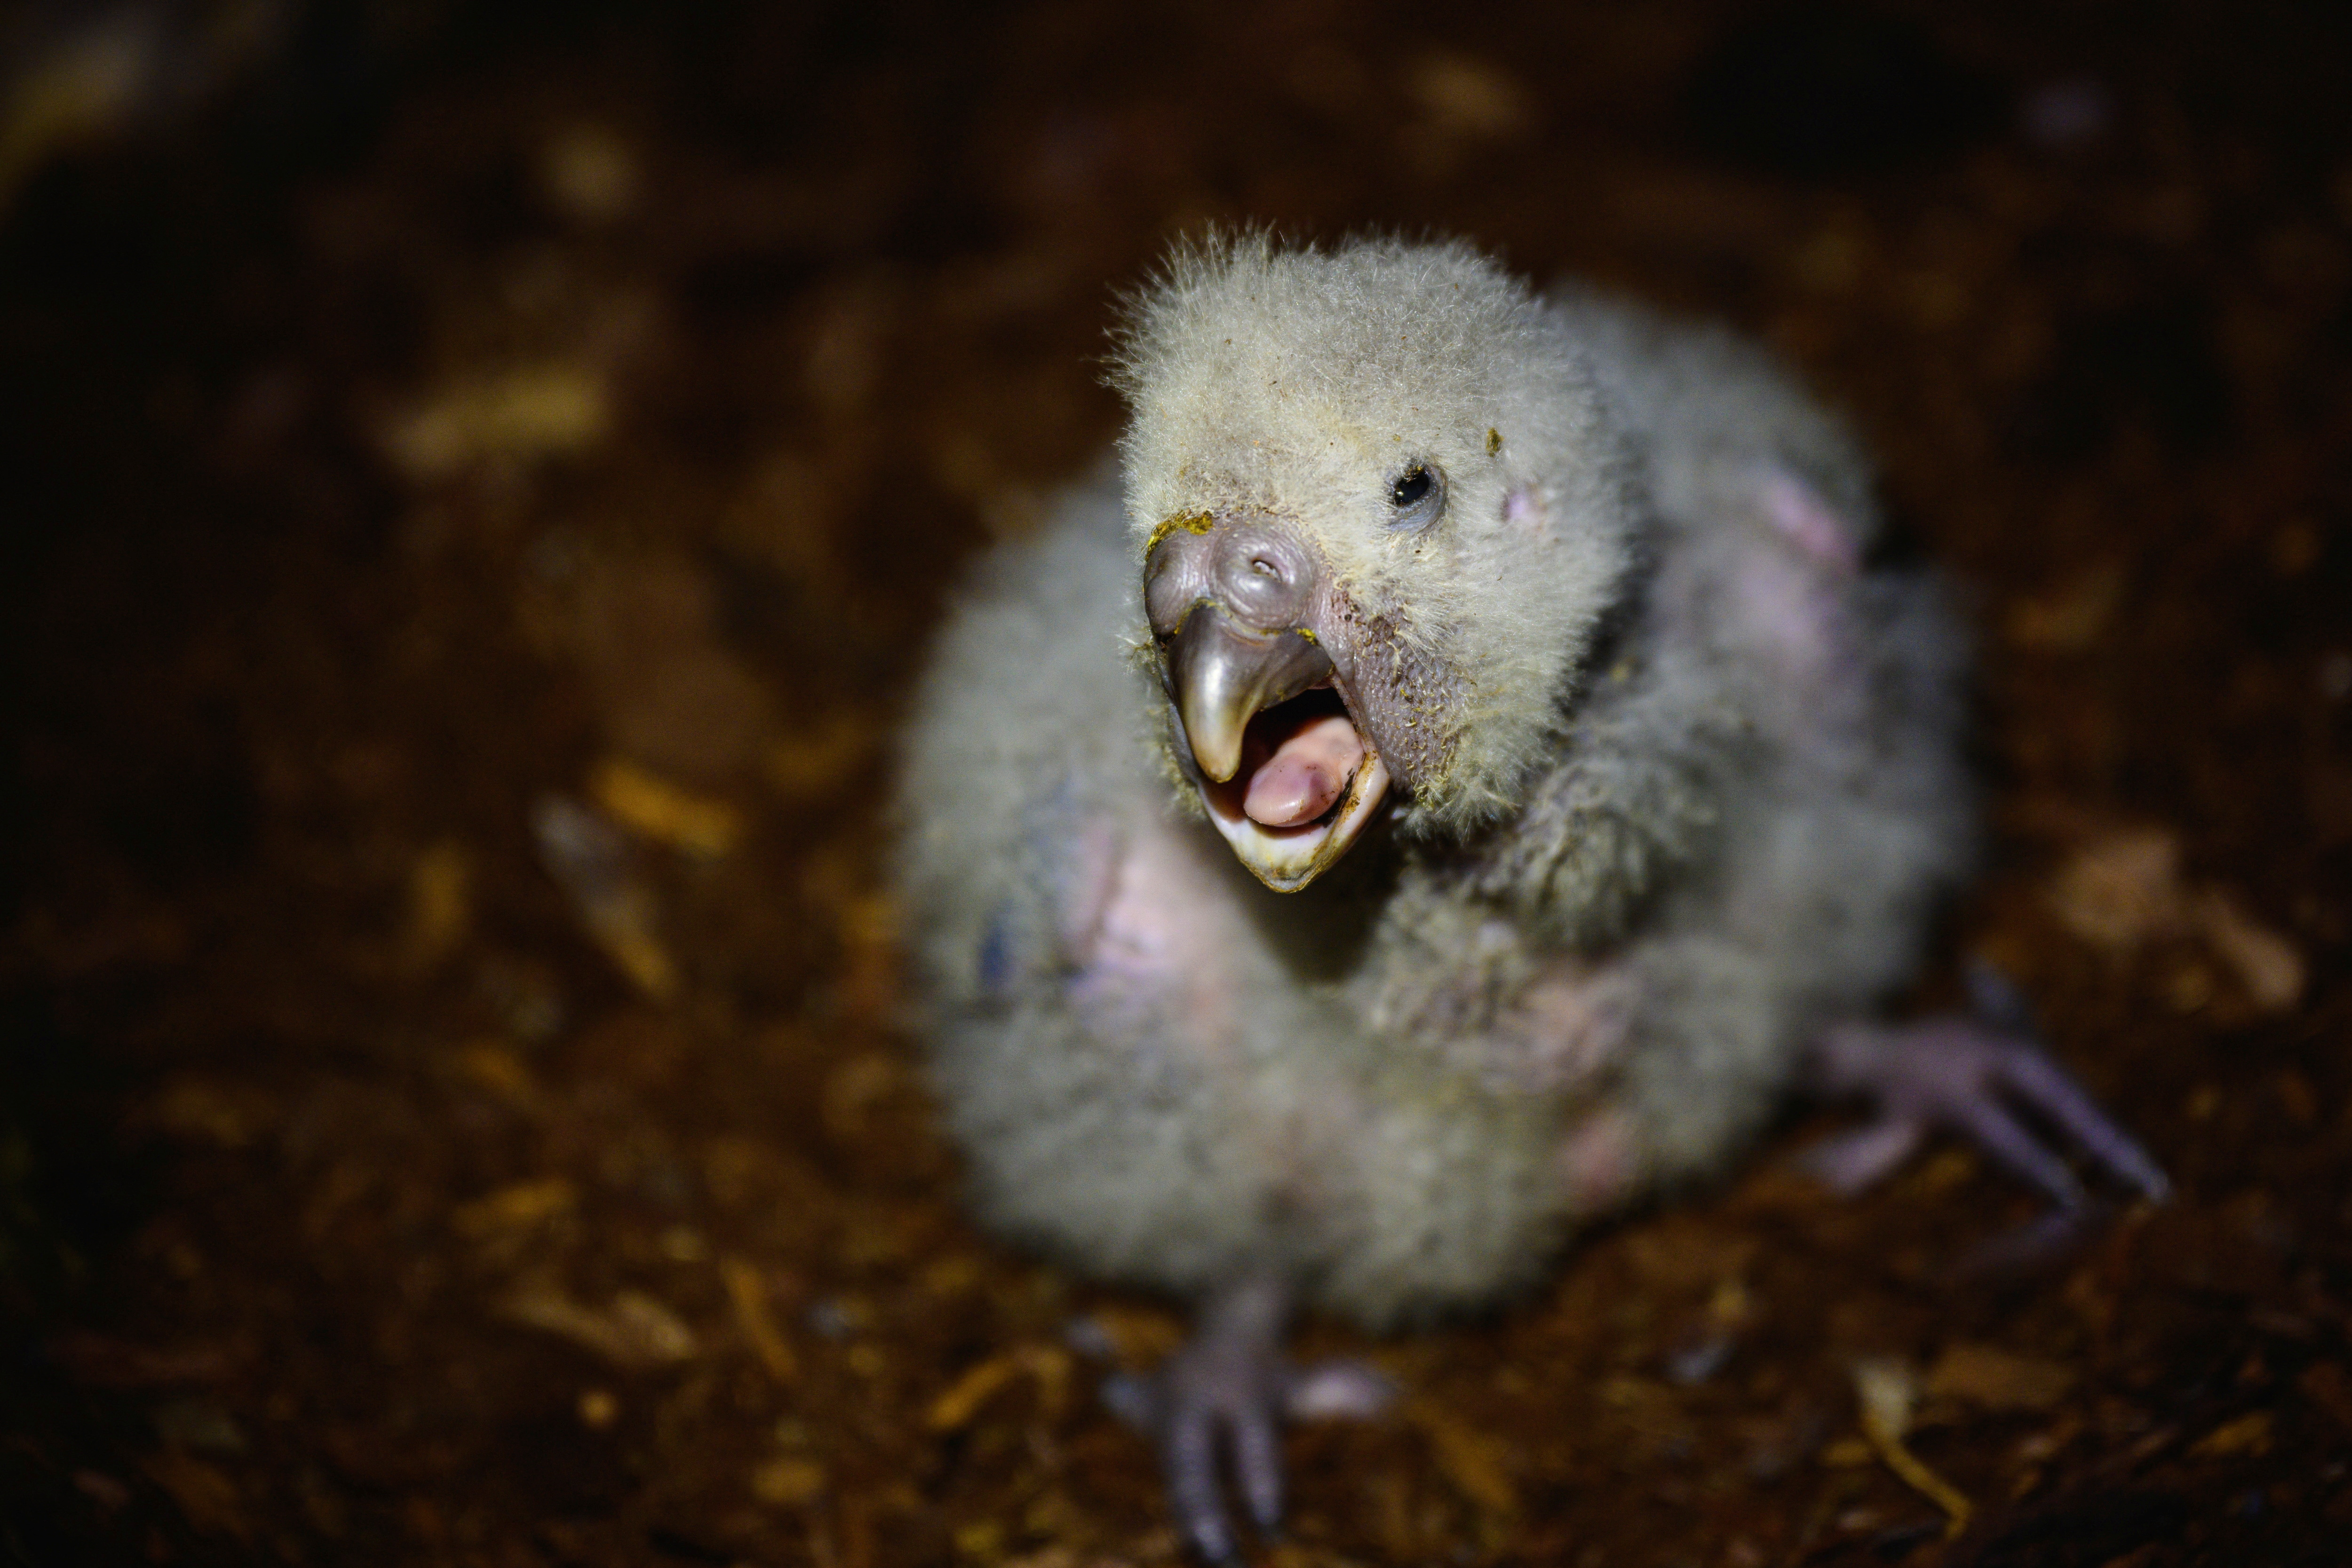 New Zealand's endangered kakapo parrot gets a big population boost